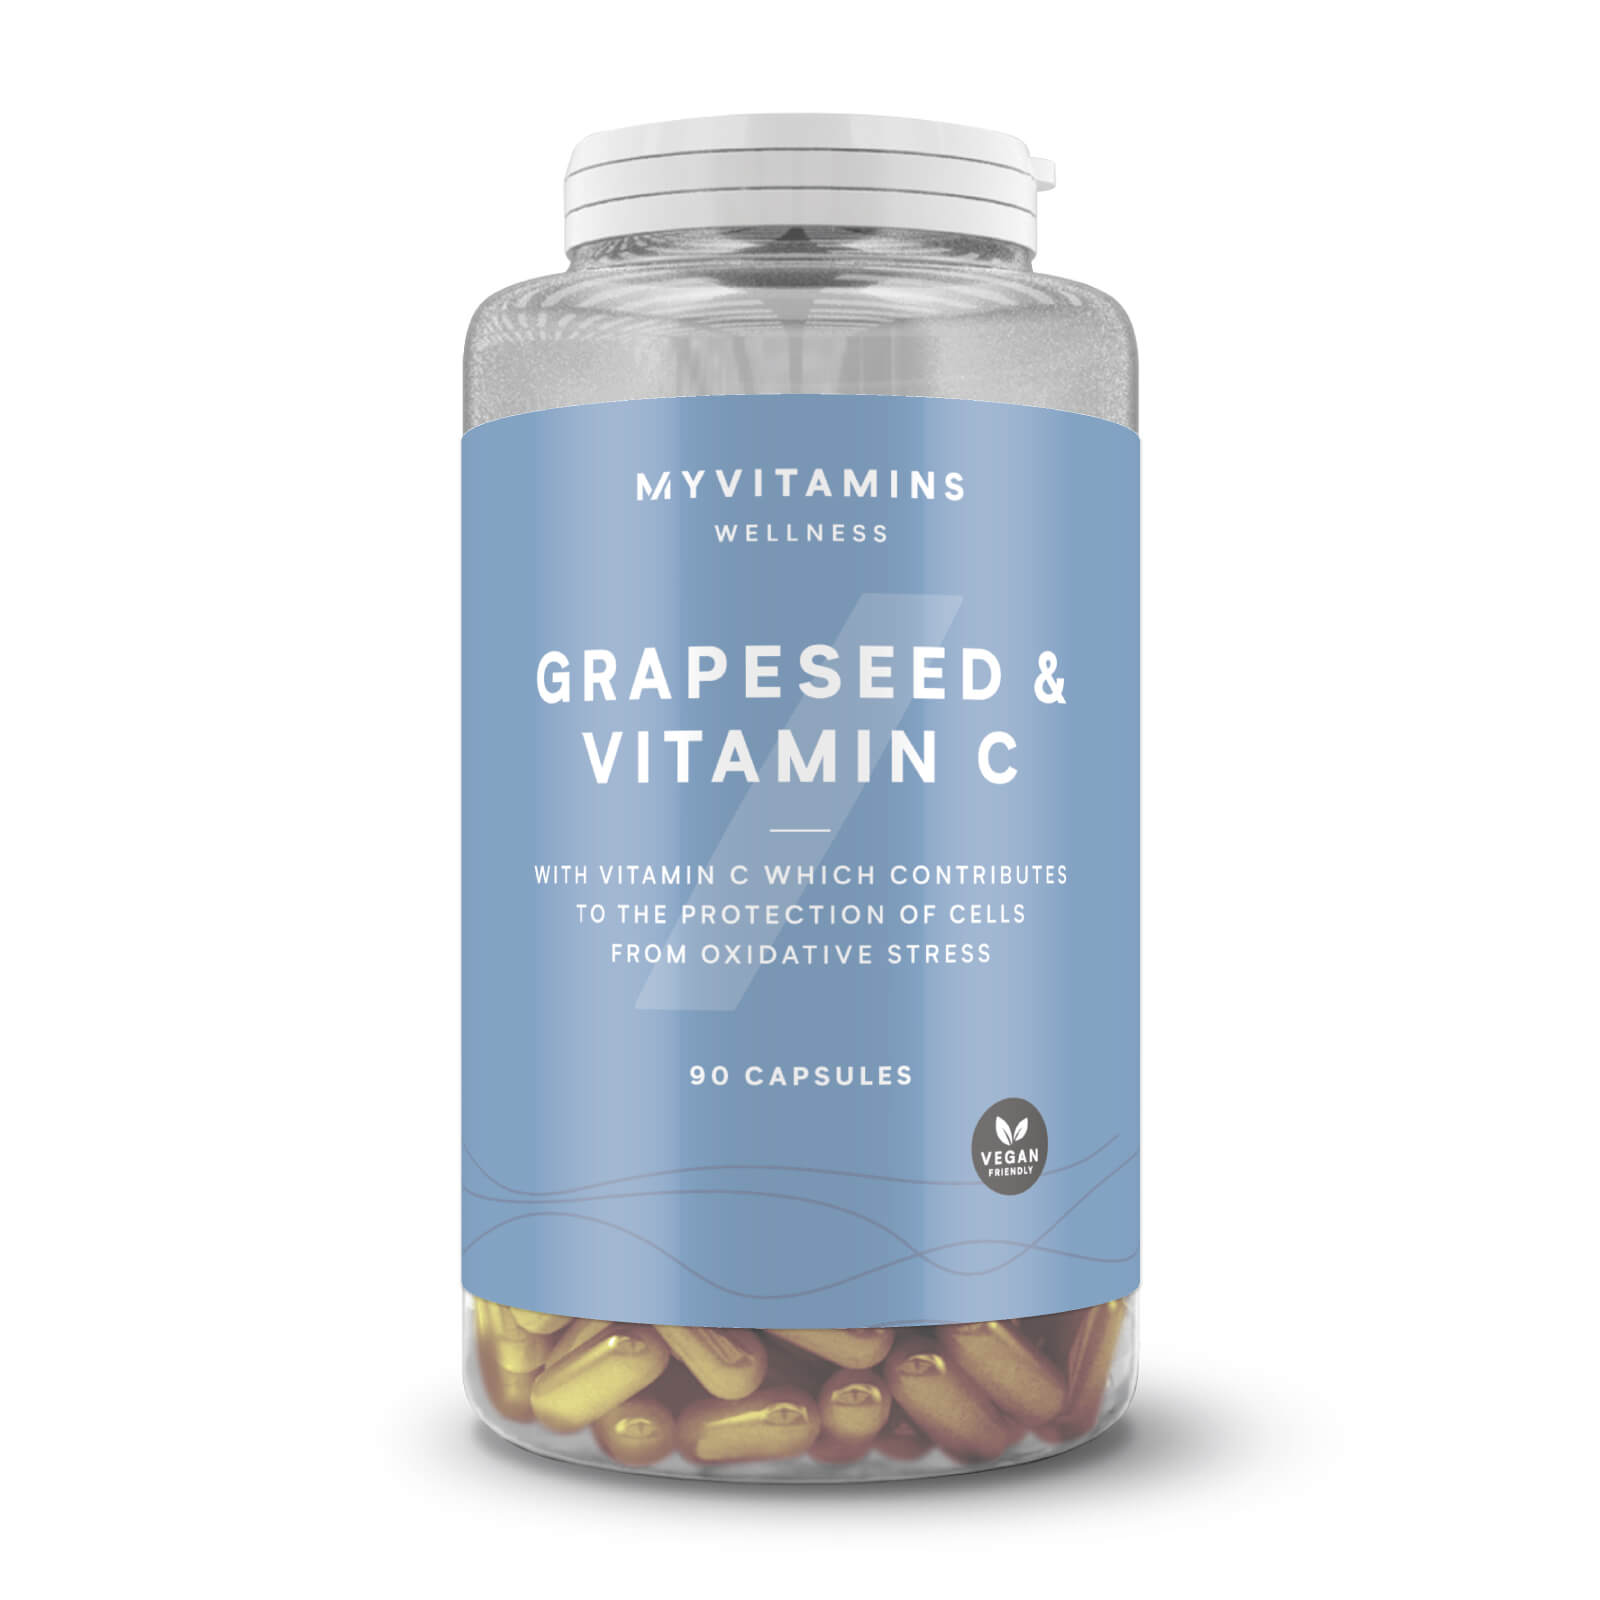 Myvitamins Grapeseed & Vitamin C Capsule - 90Capsules